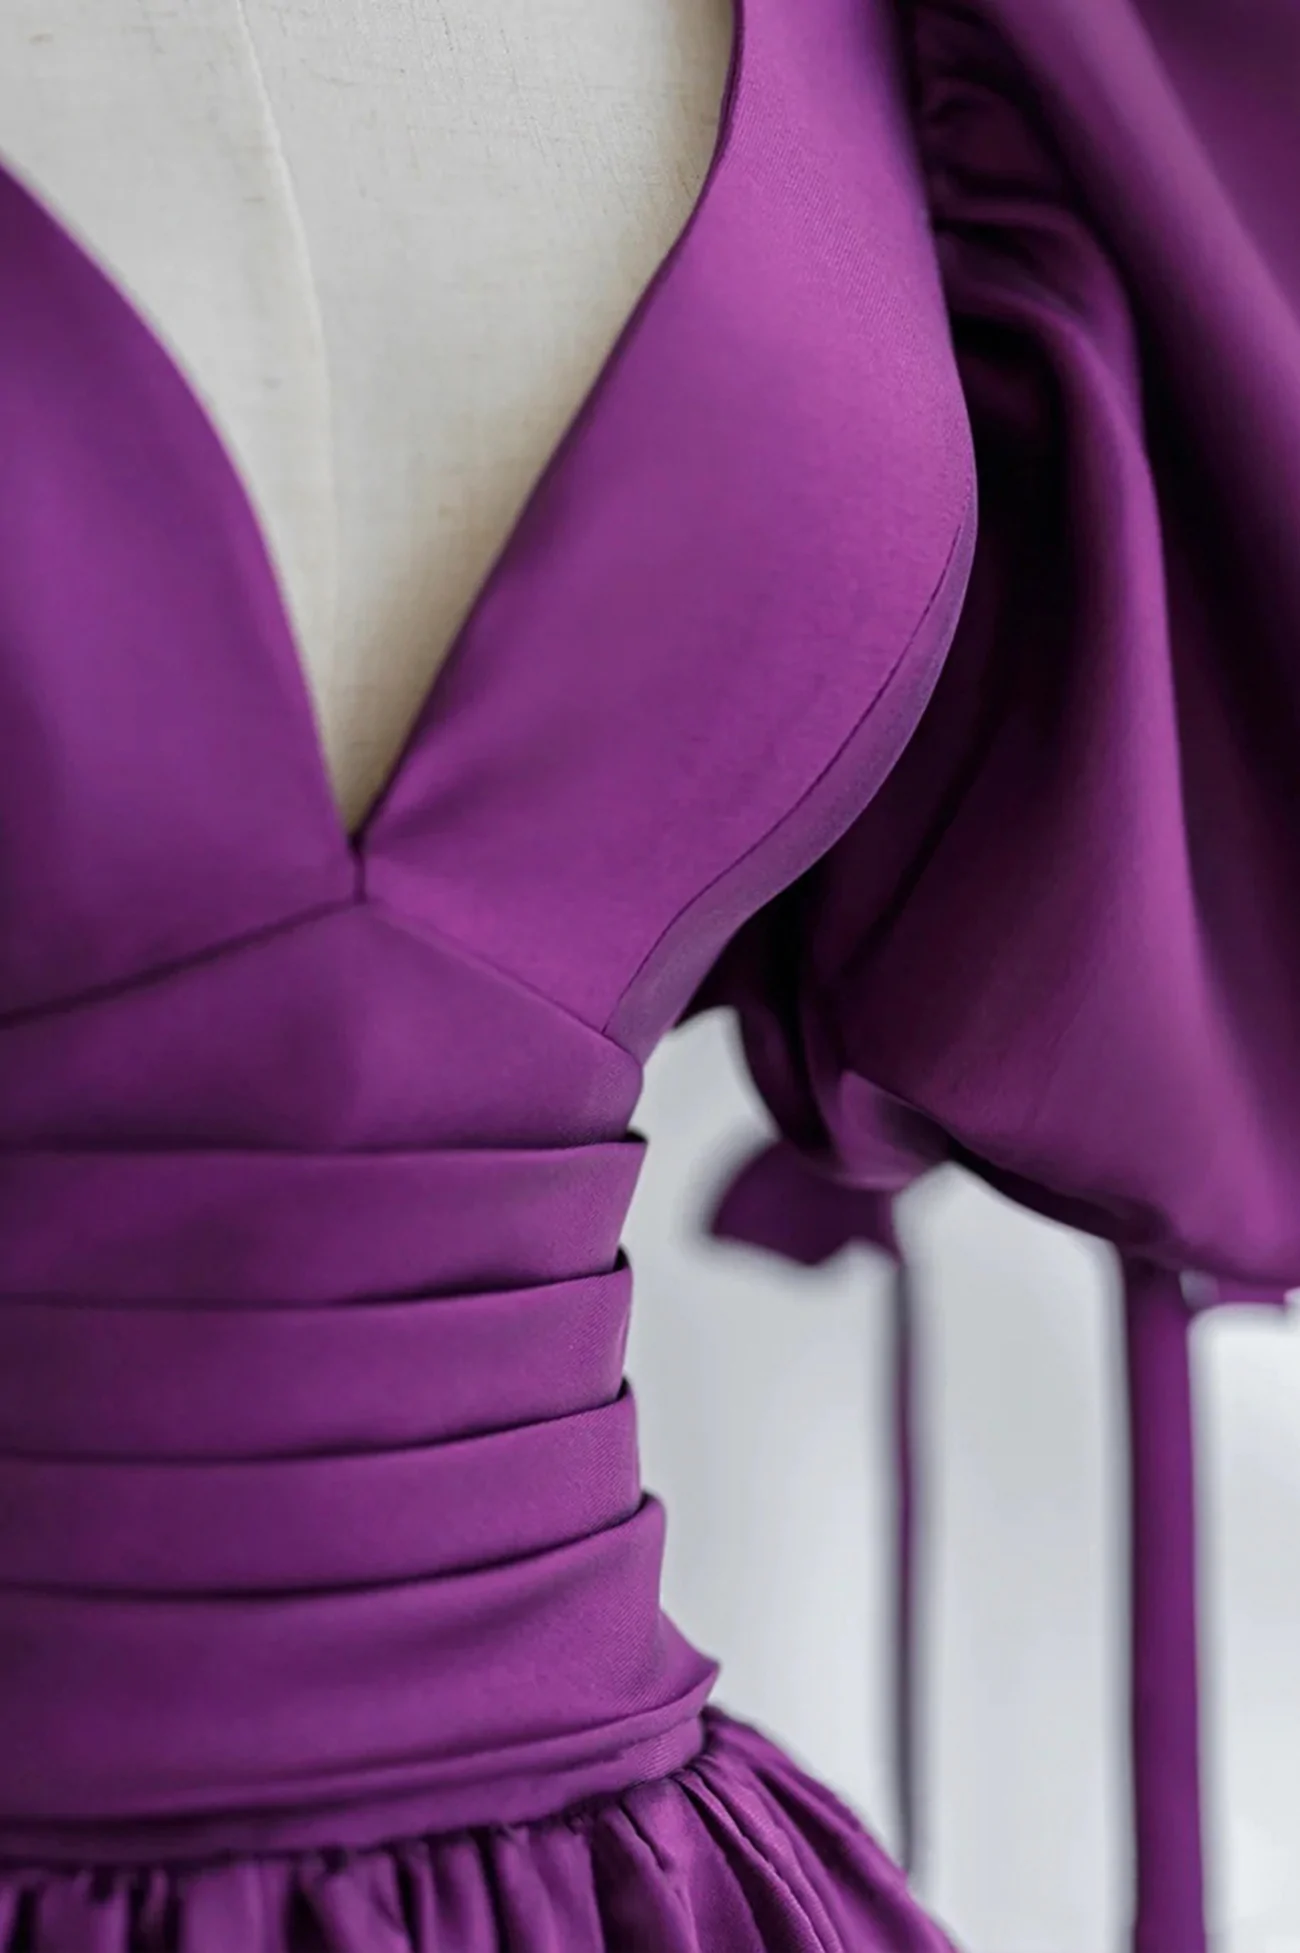 Purple Puff Sleeves Satin Long Prom Dress, V-Neck Evening Dress Y856